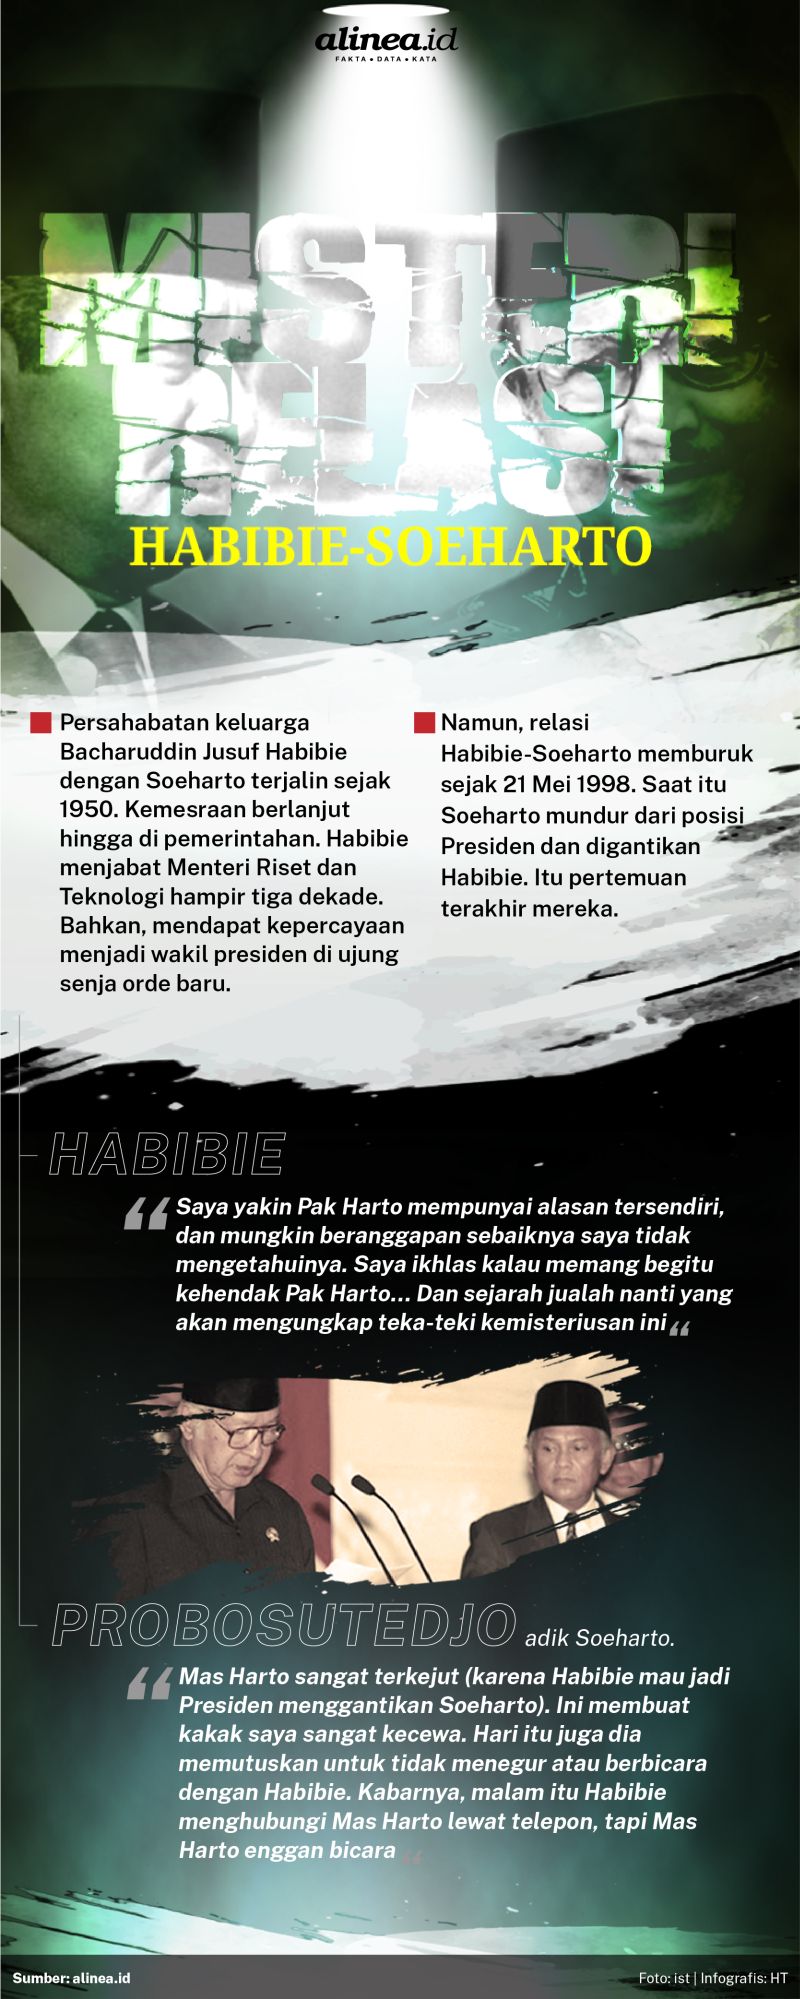 Misteri relasi Habibie dan Soeharto. Alinea.id.